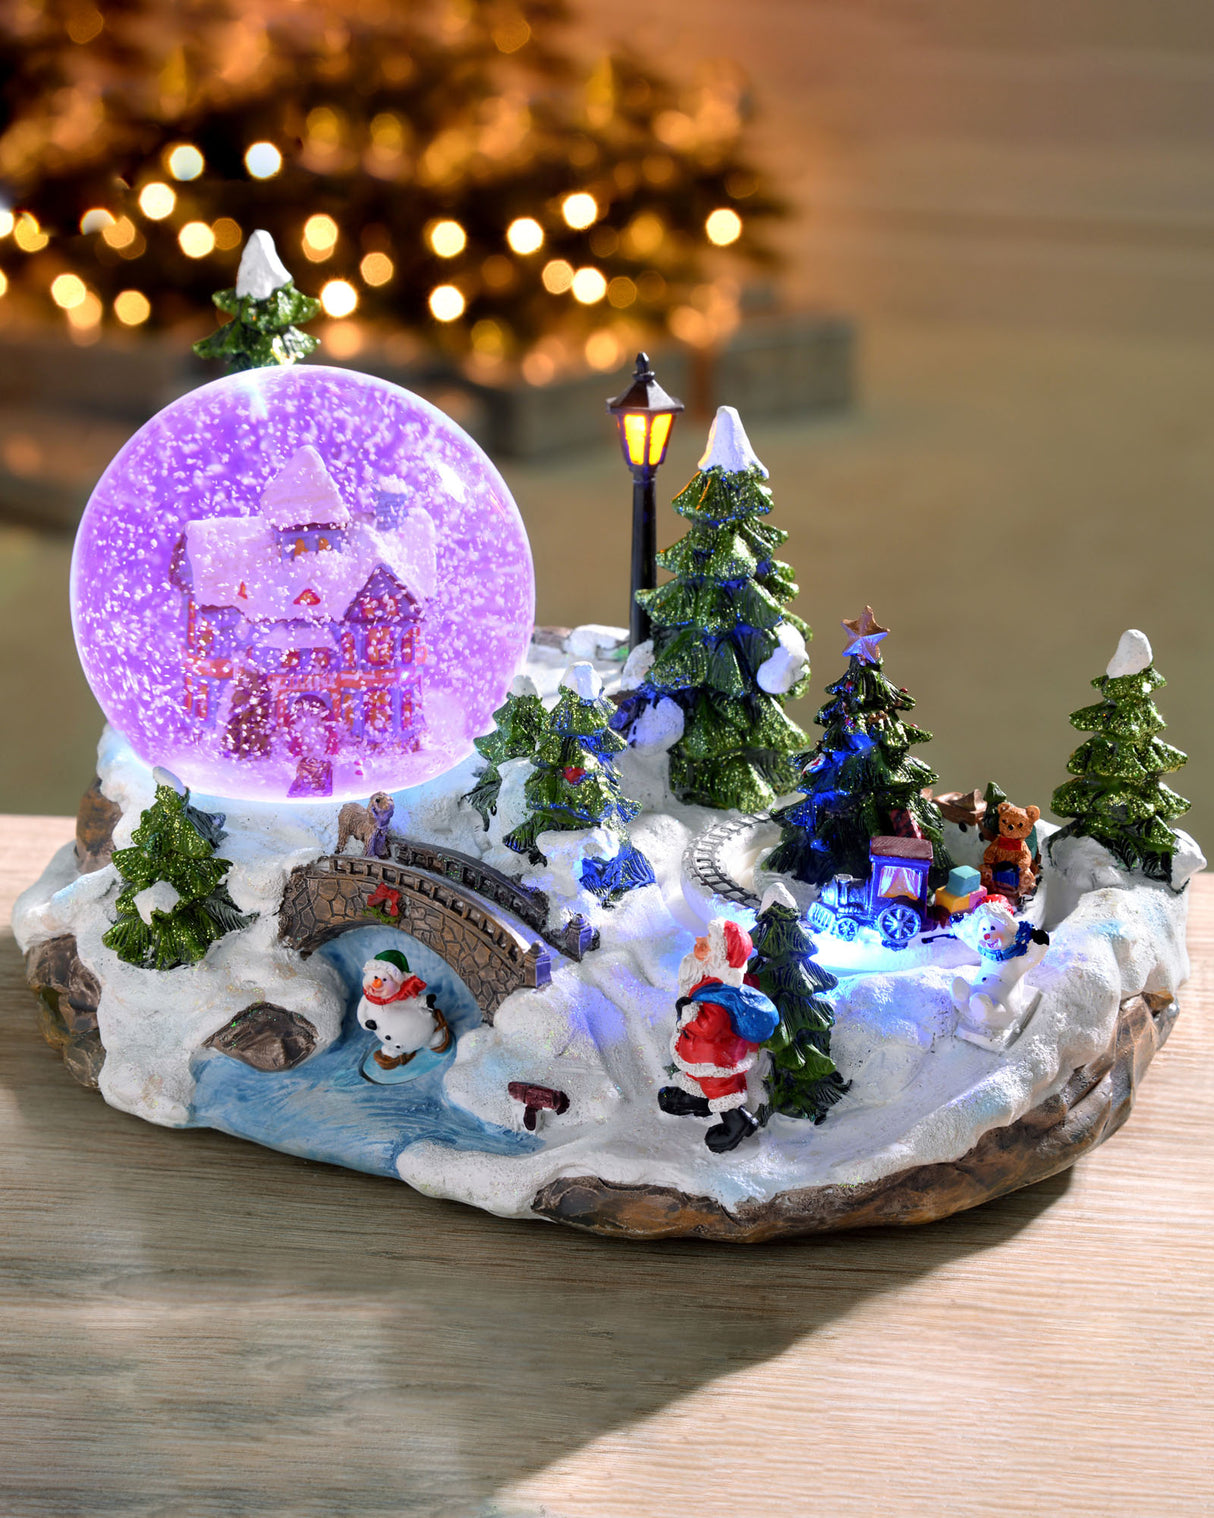 Animated Village Scene Musical Snow Globe, 25 cm